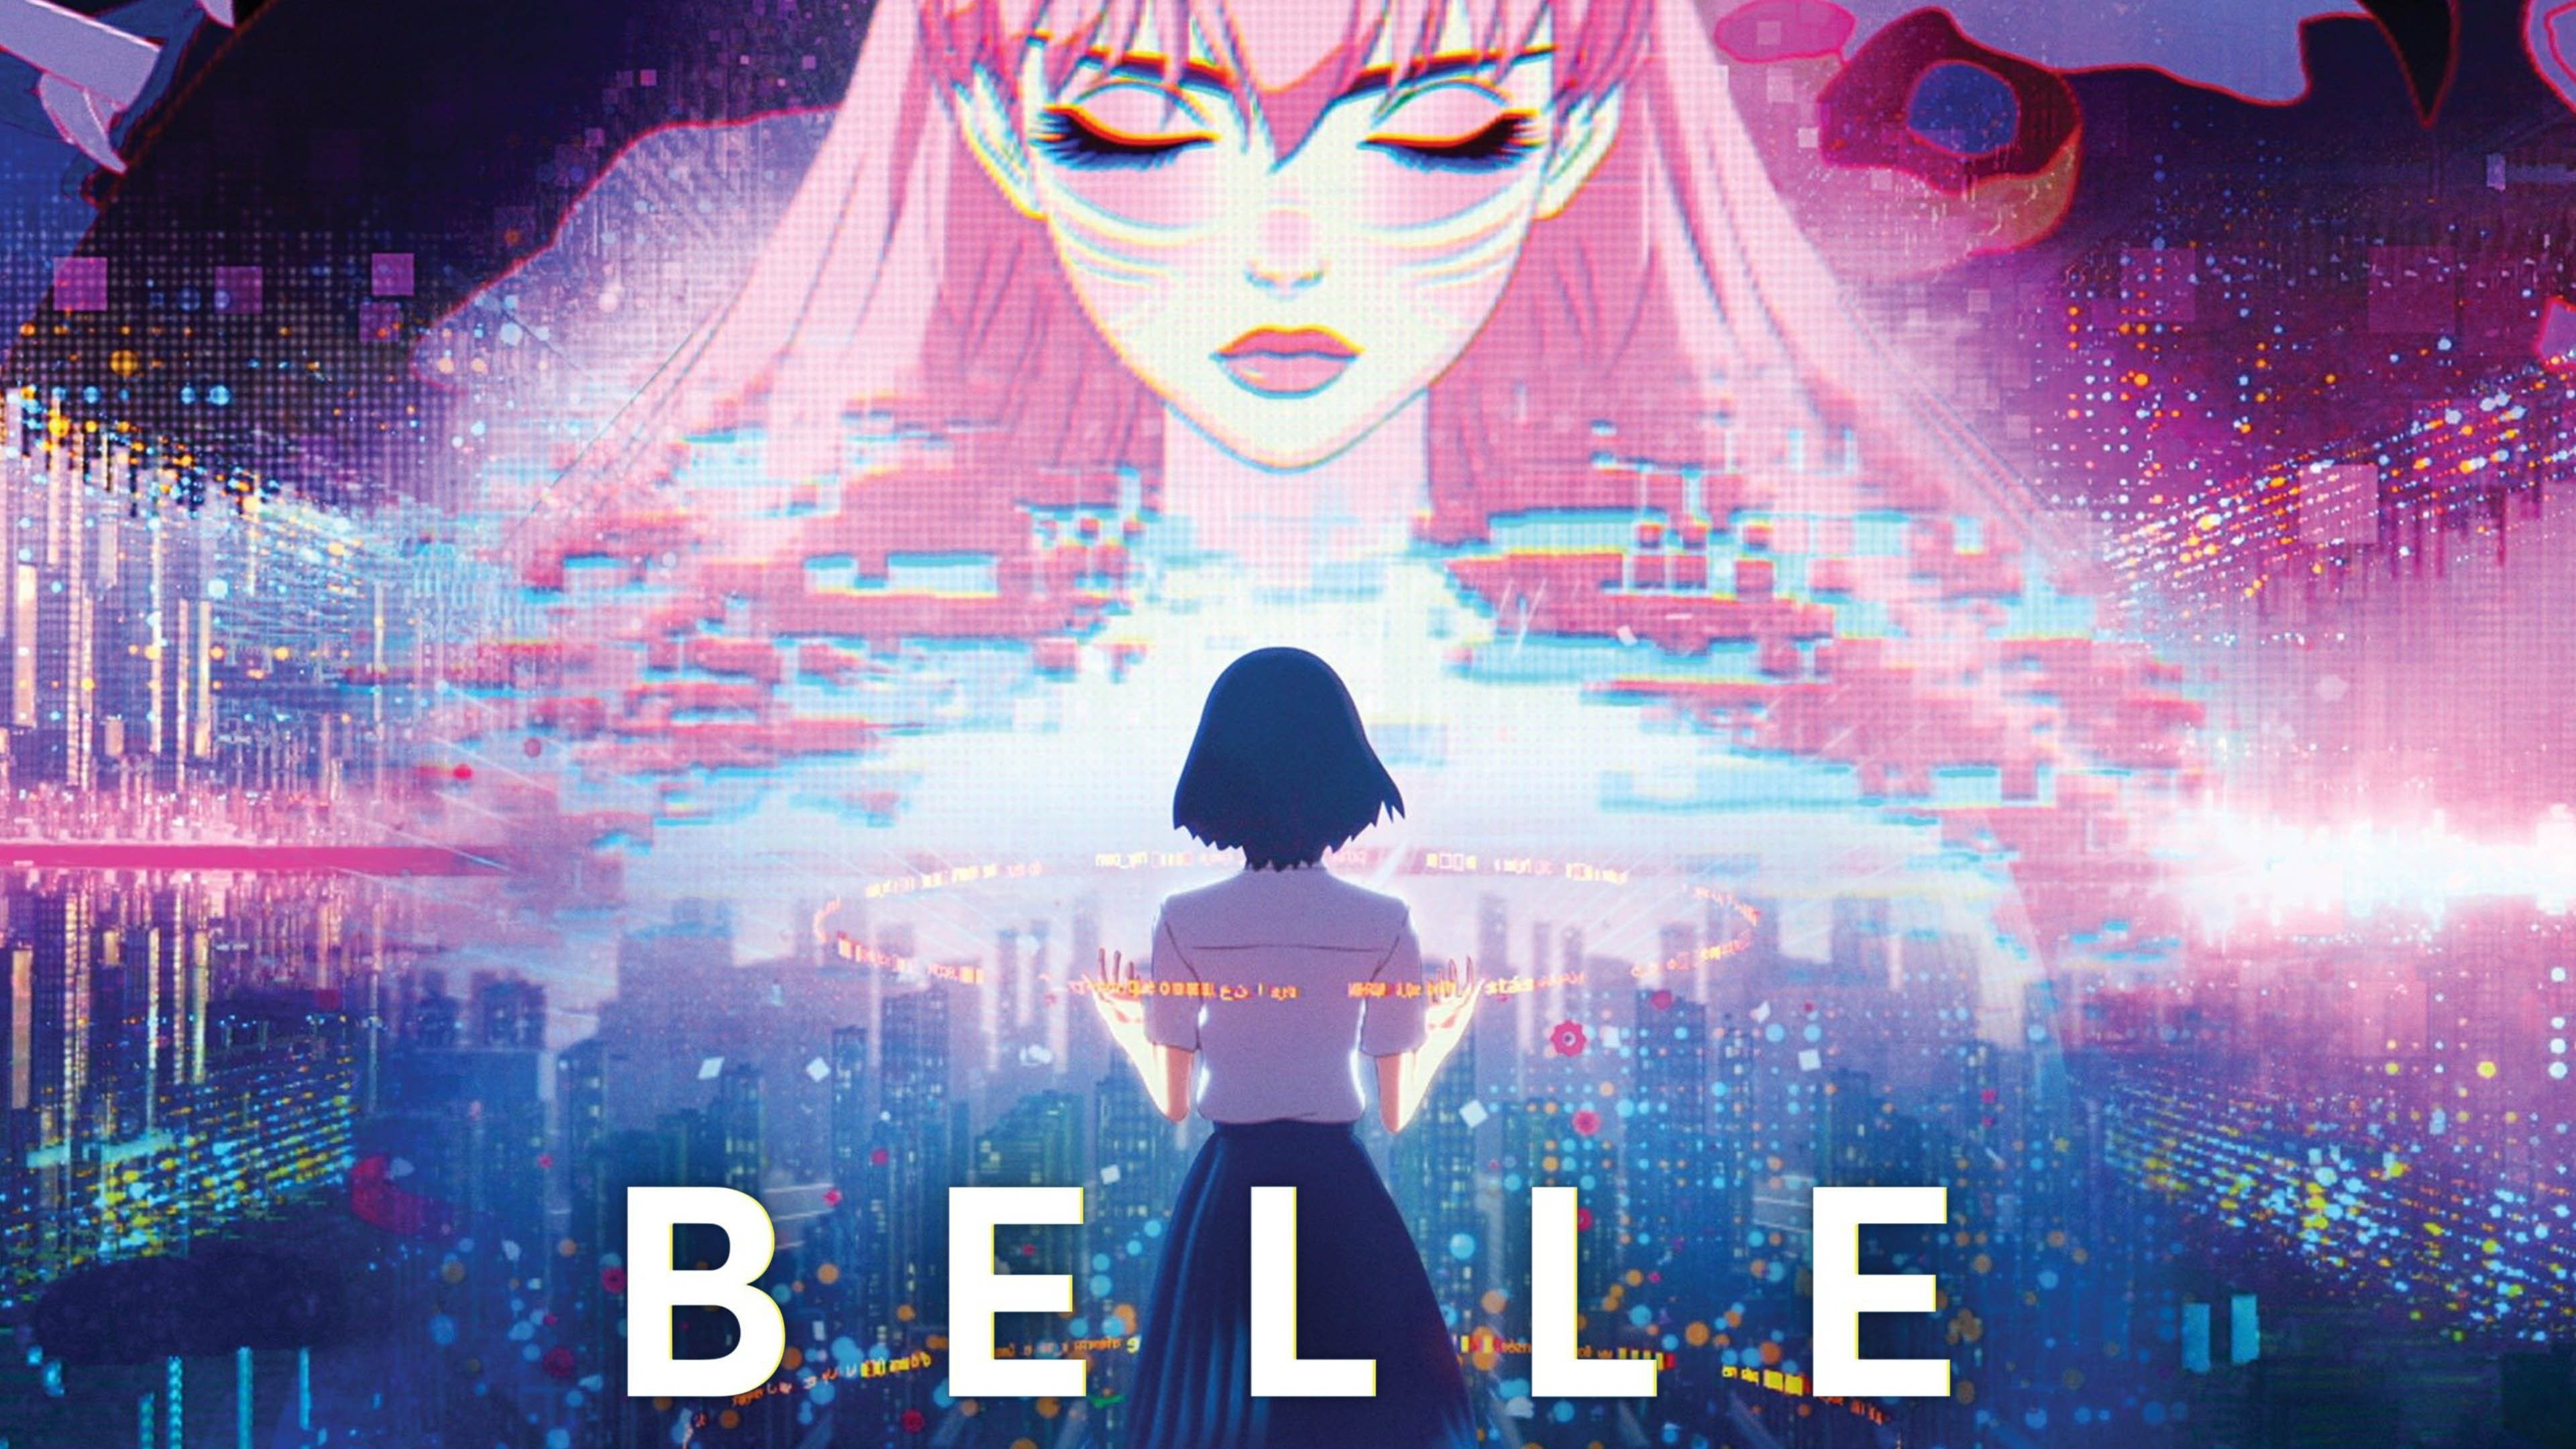 Animeow - Watch HD Belle and Sebastian anime free online